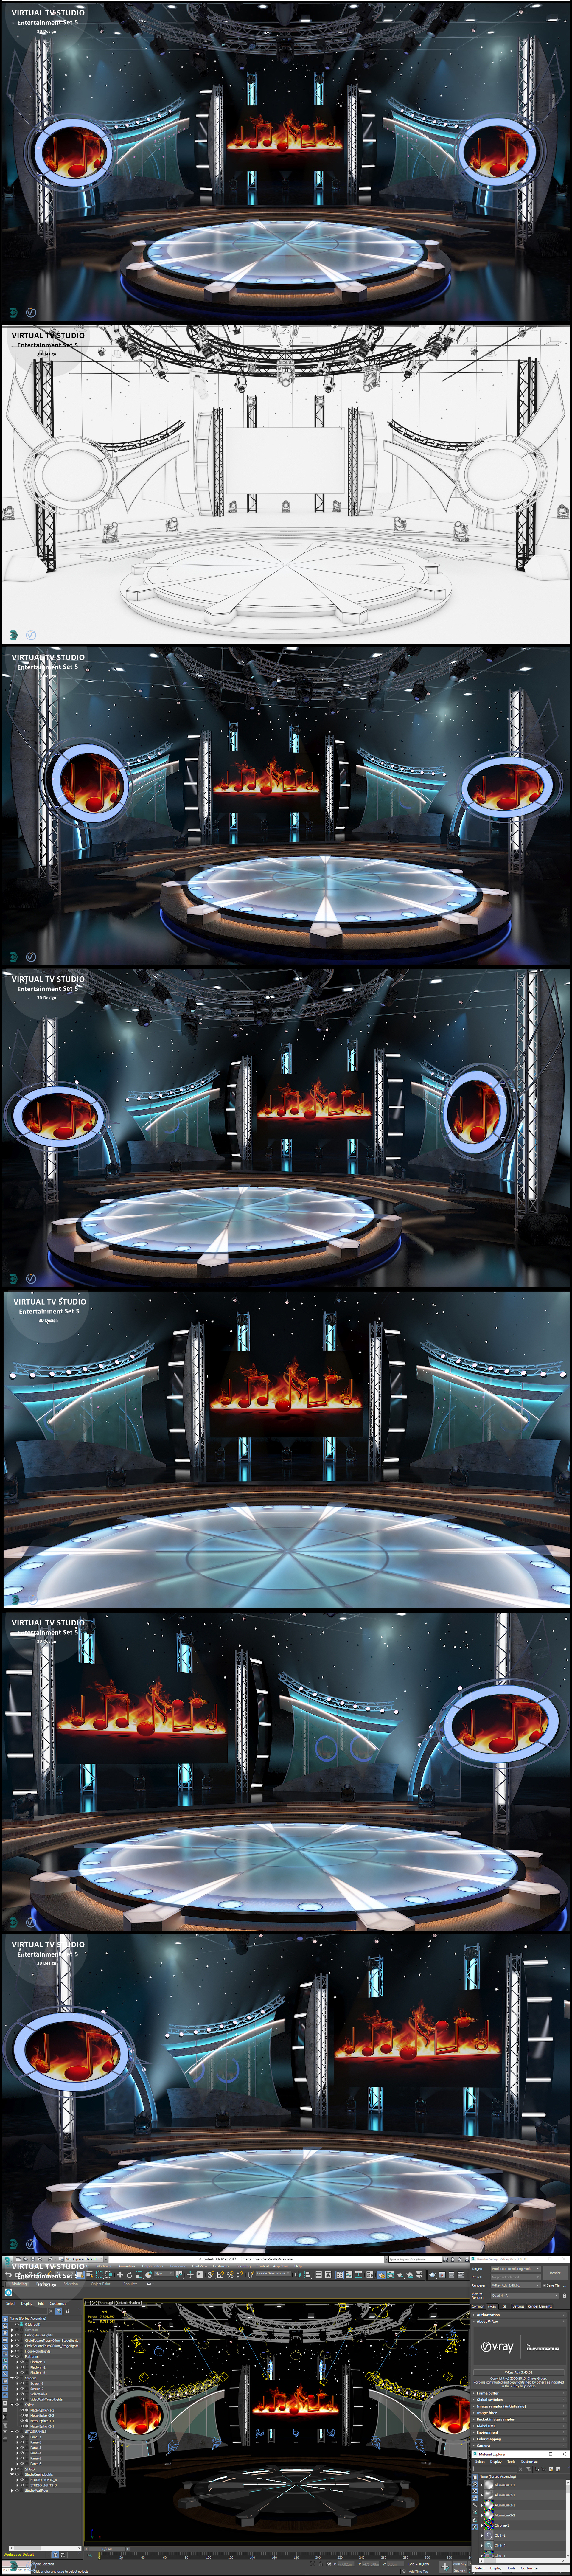 Virtual TV Studio Entertainment Set 5  - 3D Model Designs